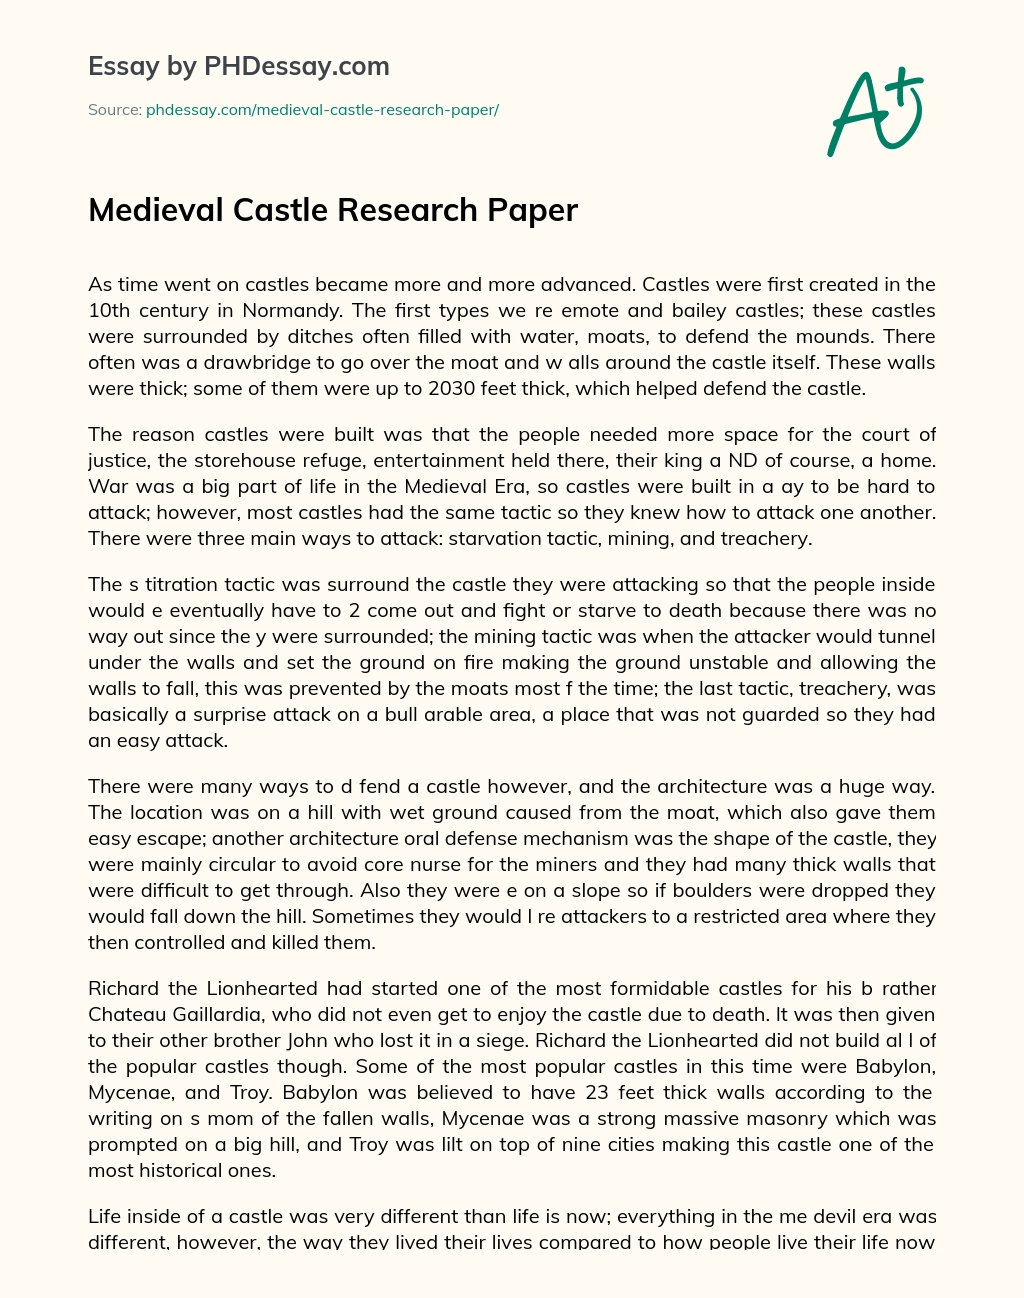 Medieval Castle Research Paper essay